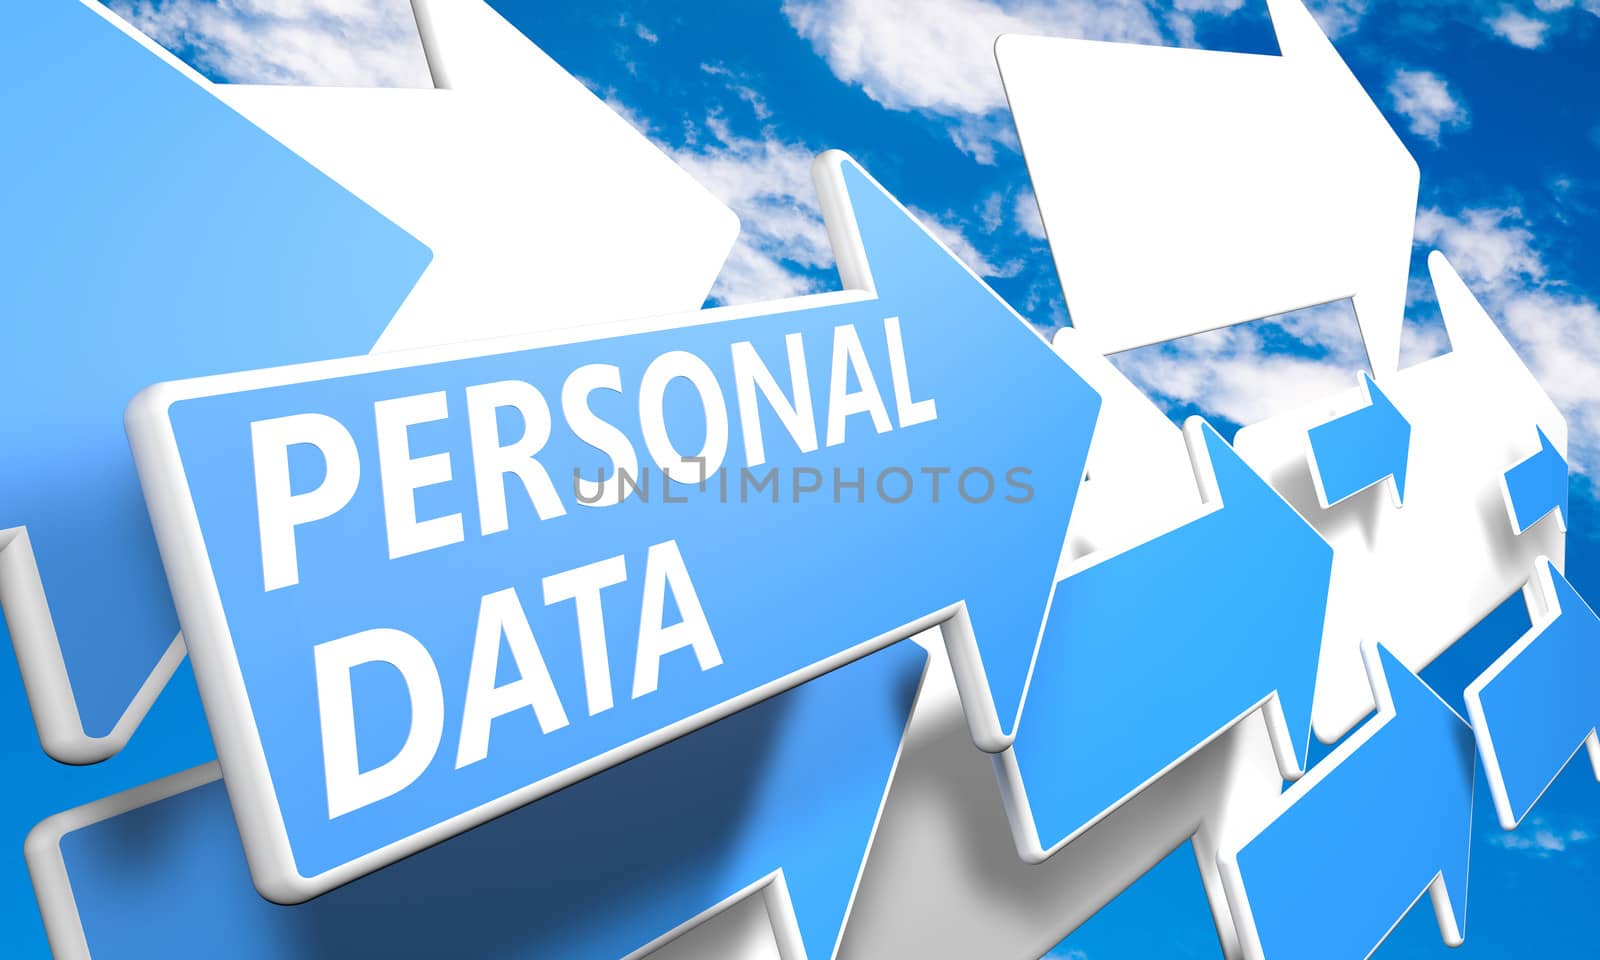 Personal Data by Mazirama